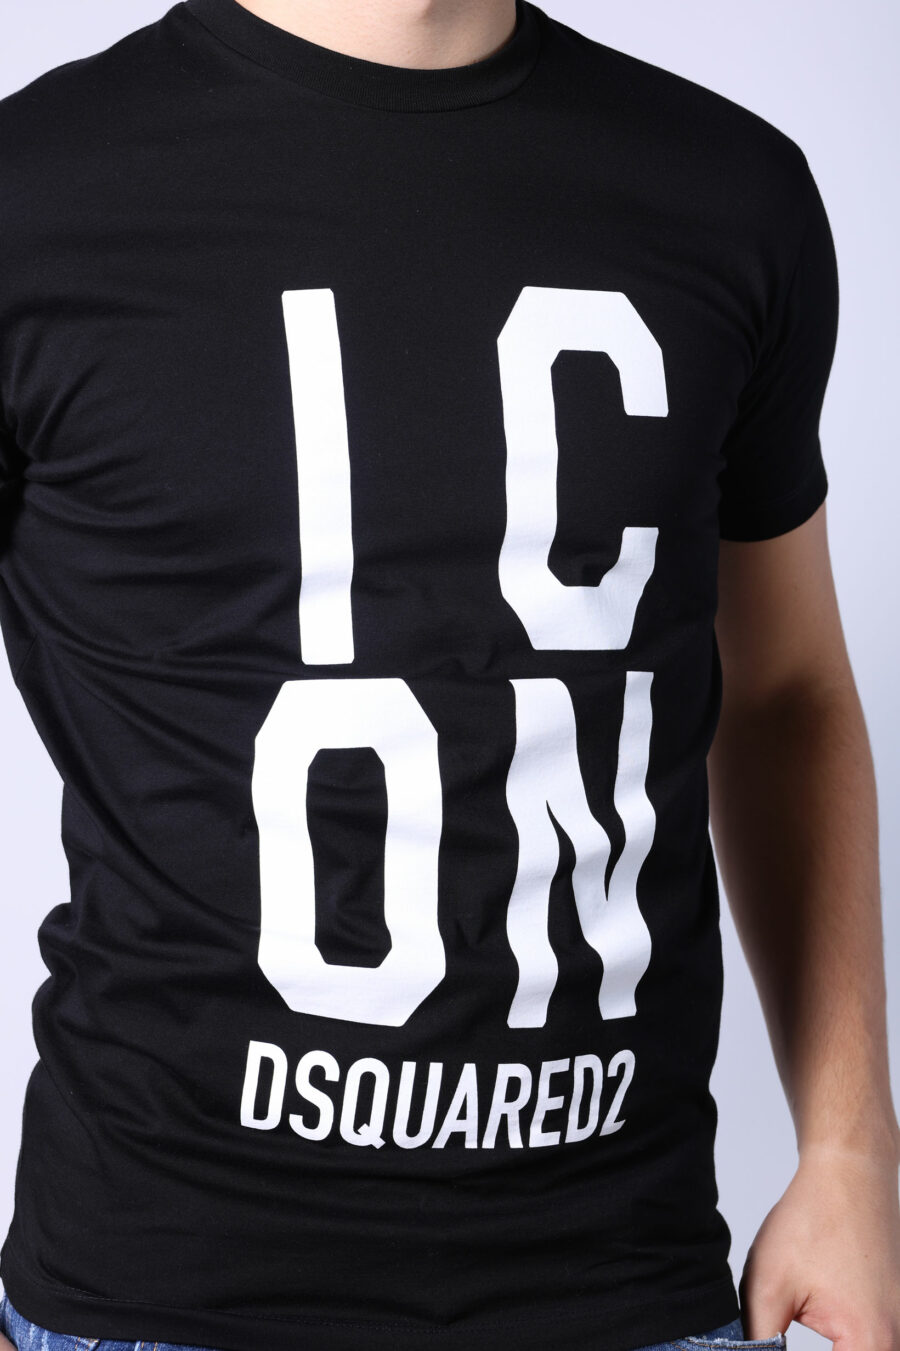 Camiseta negra con maxilogo "icon" cuadrado - Untitled Catalog 05285